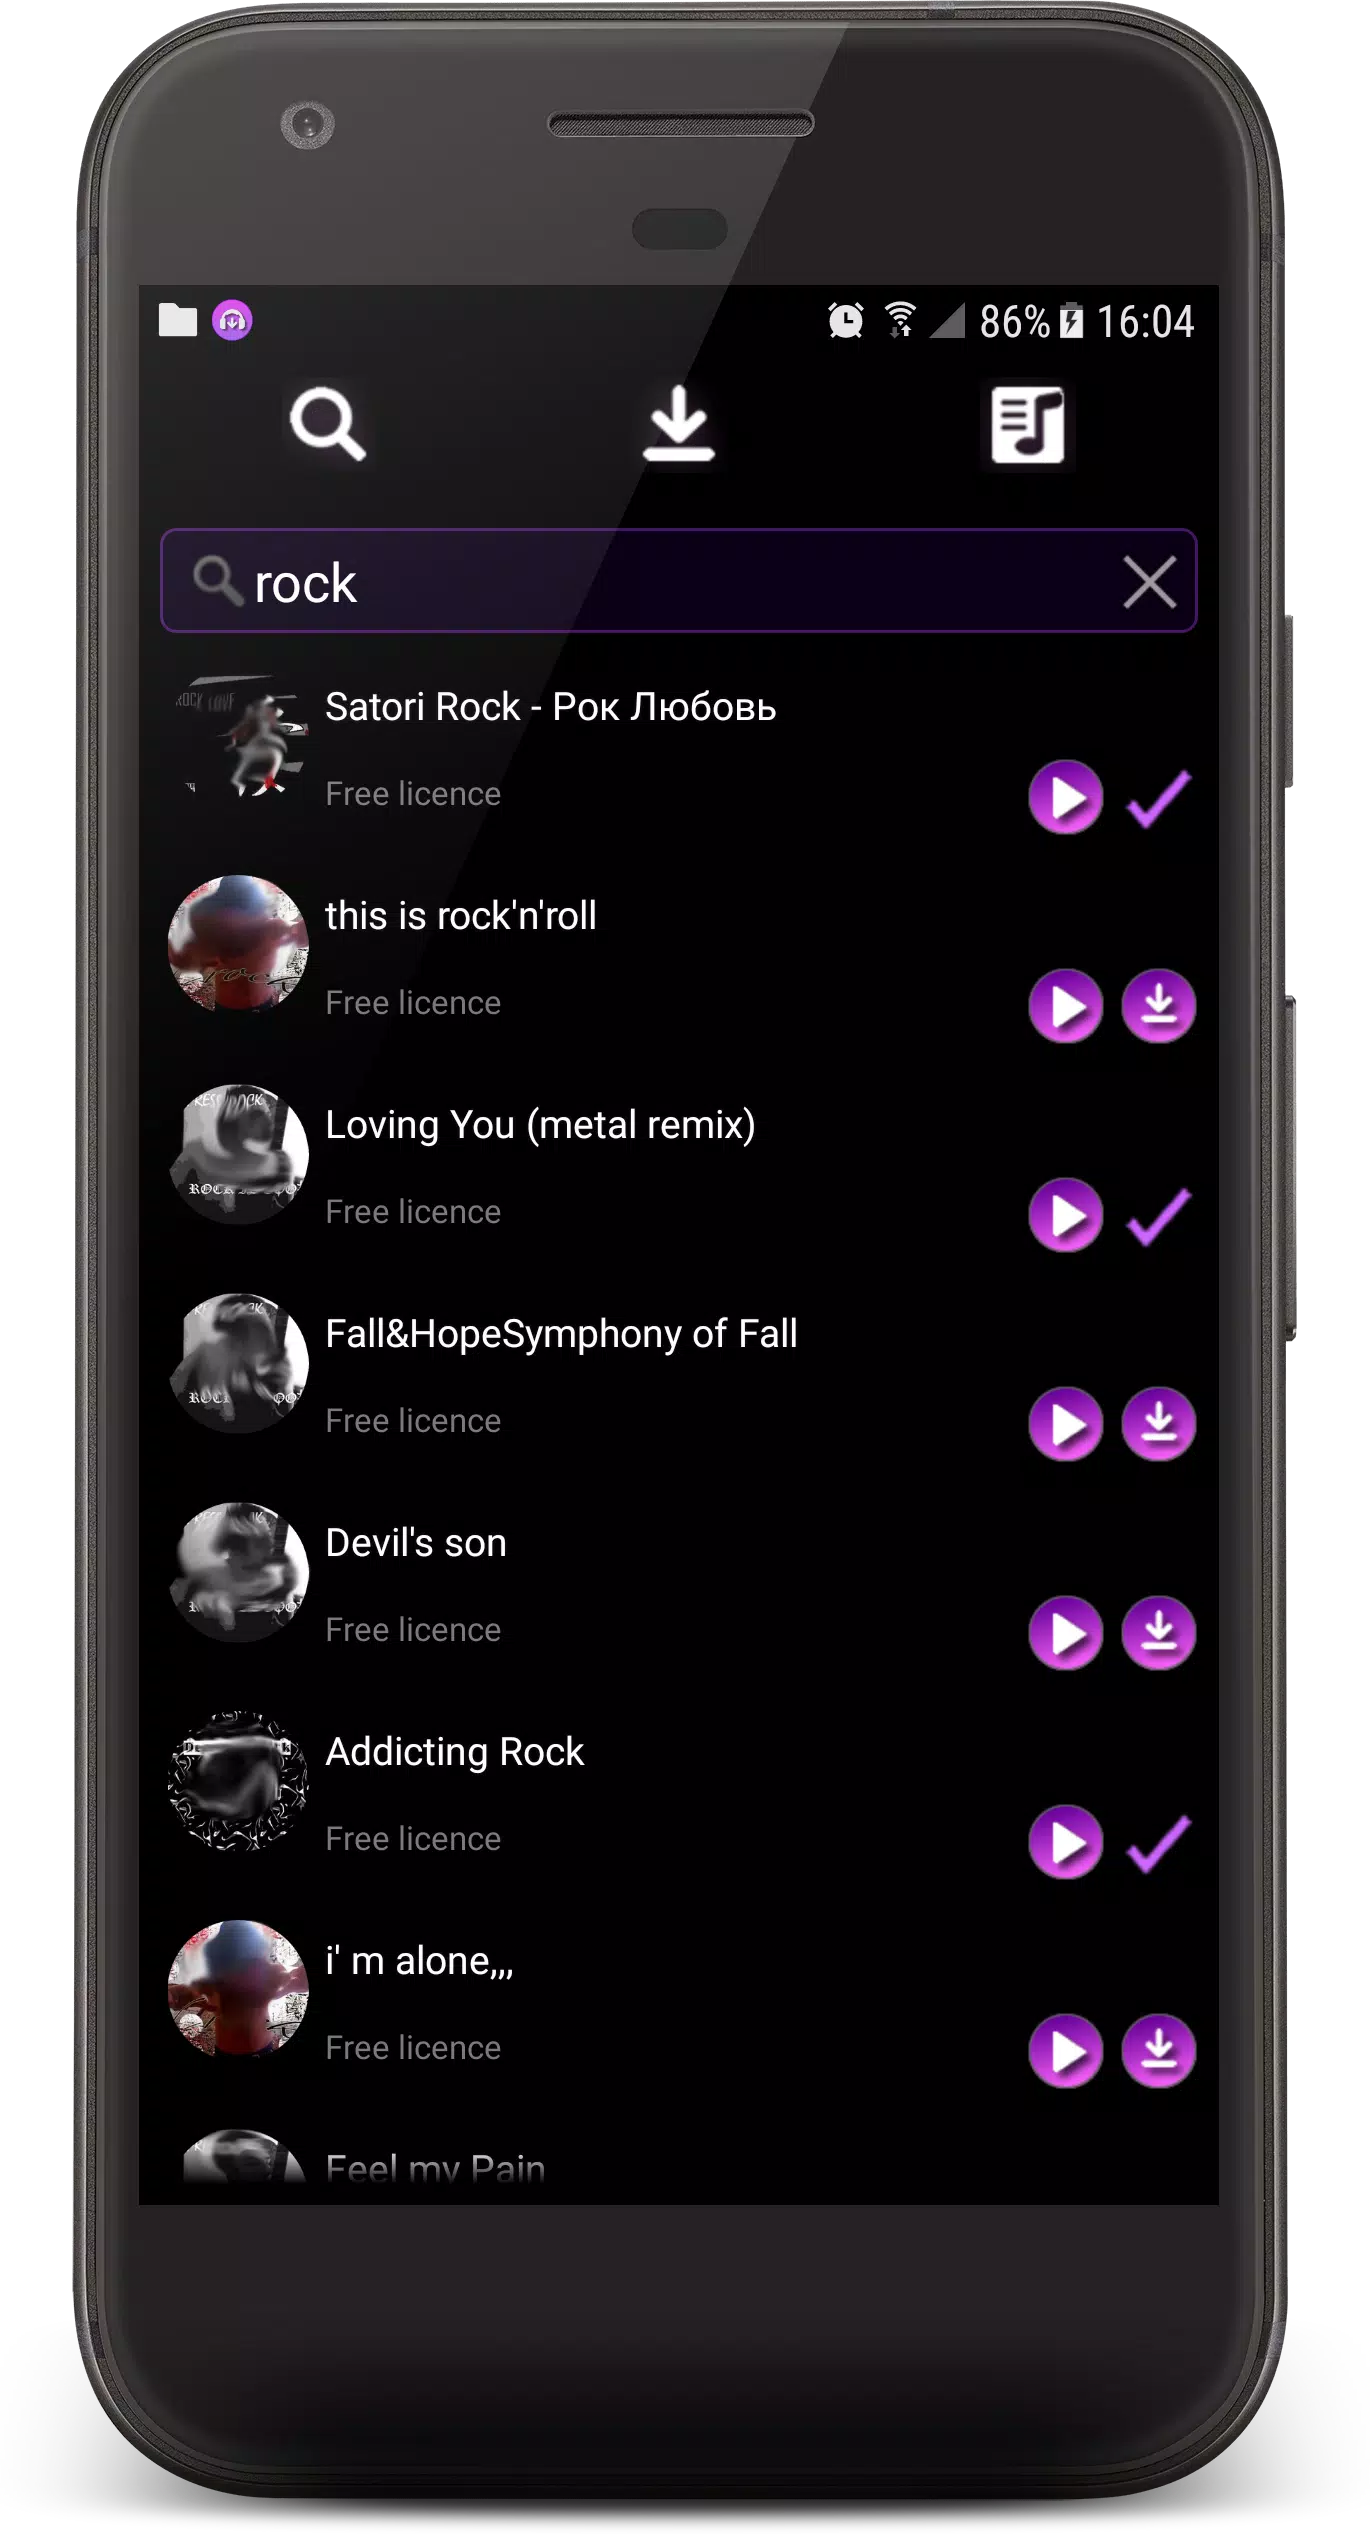 Descarga de APK de MelodycApp descargar musica gratis para Android